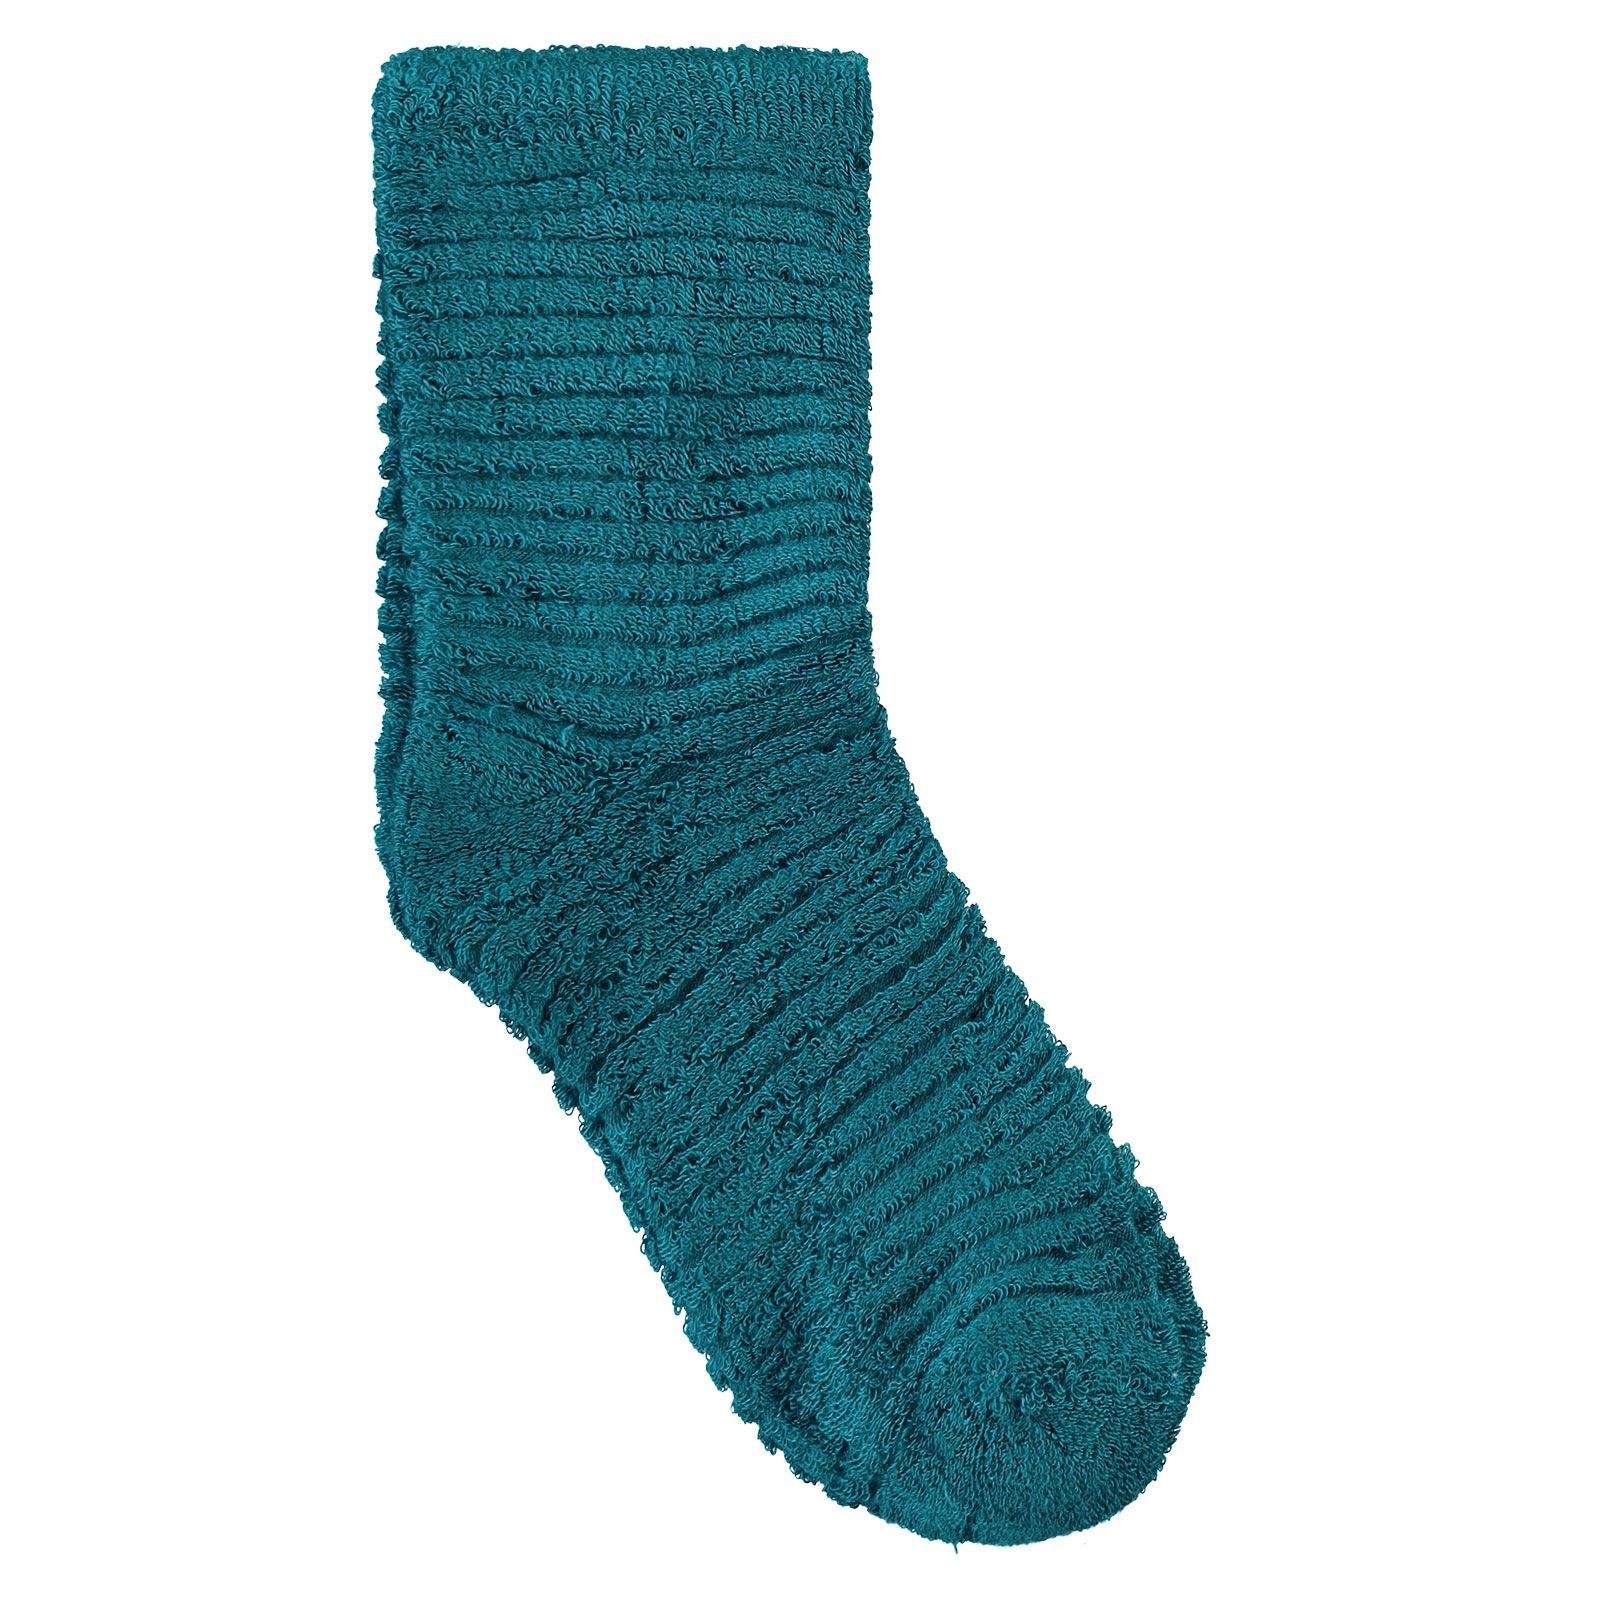 Bella Calze Kız Çocuk Ters Havlu Soket Çorap 36-40 Numara Petrol